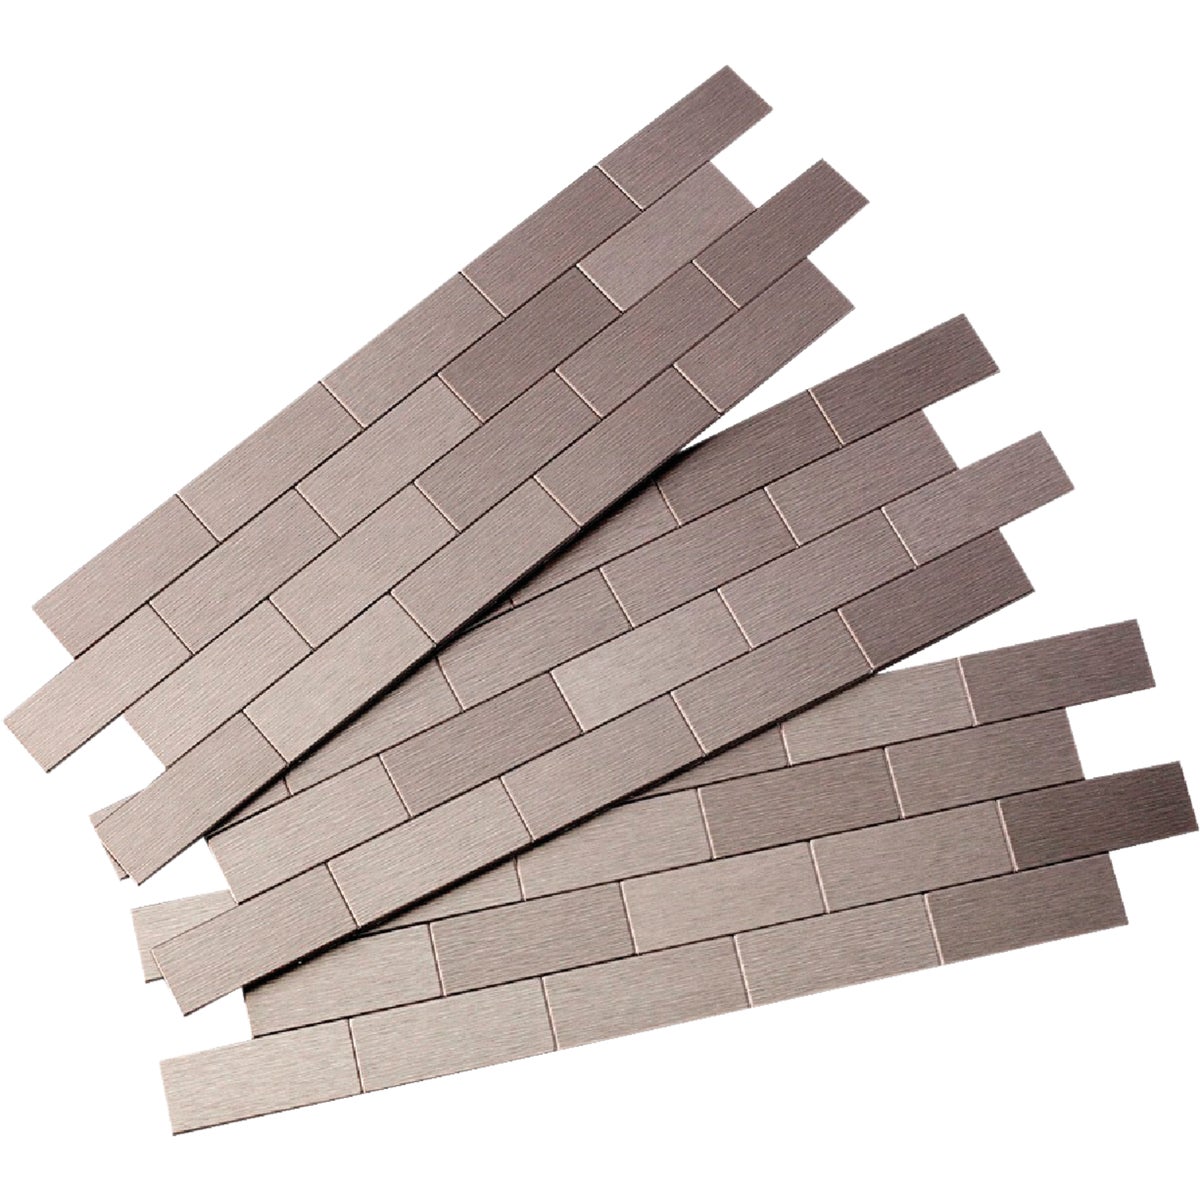 Aspect 12 In. x 4 In. Aluminum Backsplash Peel & Stick, Stainless Steel Subway Tile